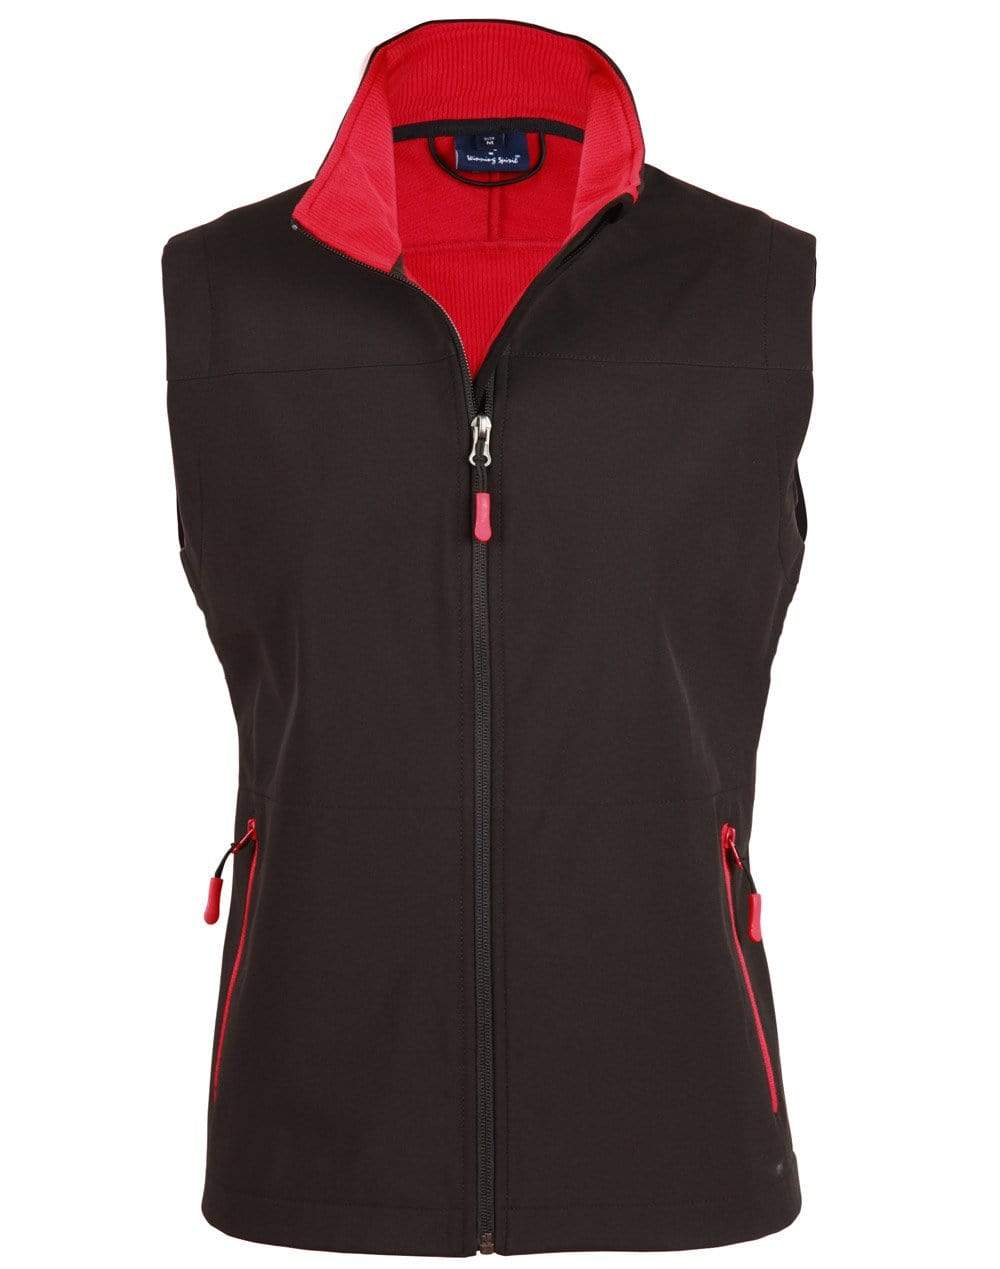 Winning Spirit Casual Wear Black/Red / 8 Rosewall Soft Shell Vest Ladies' Jk46